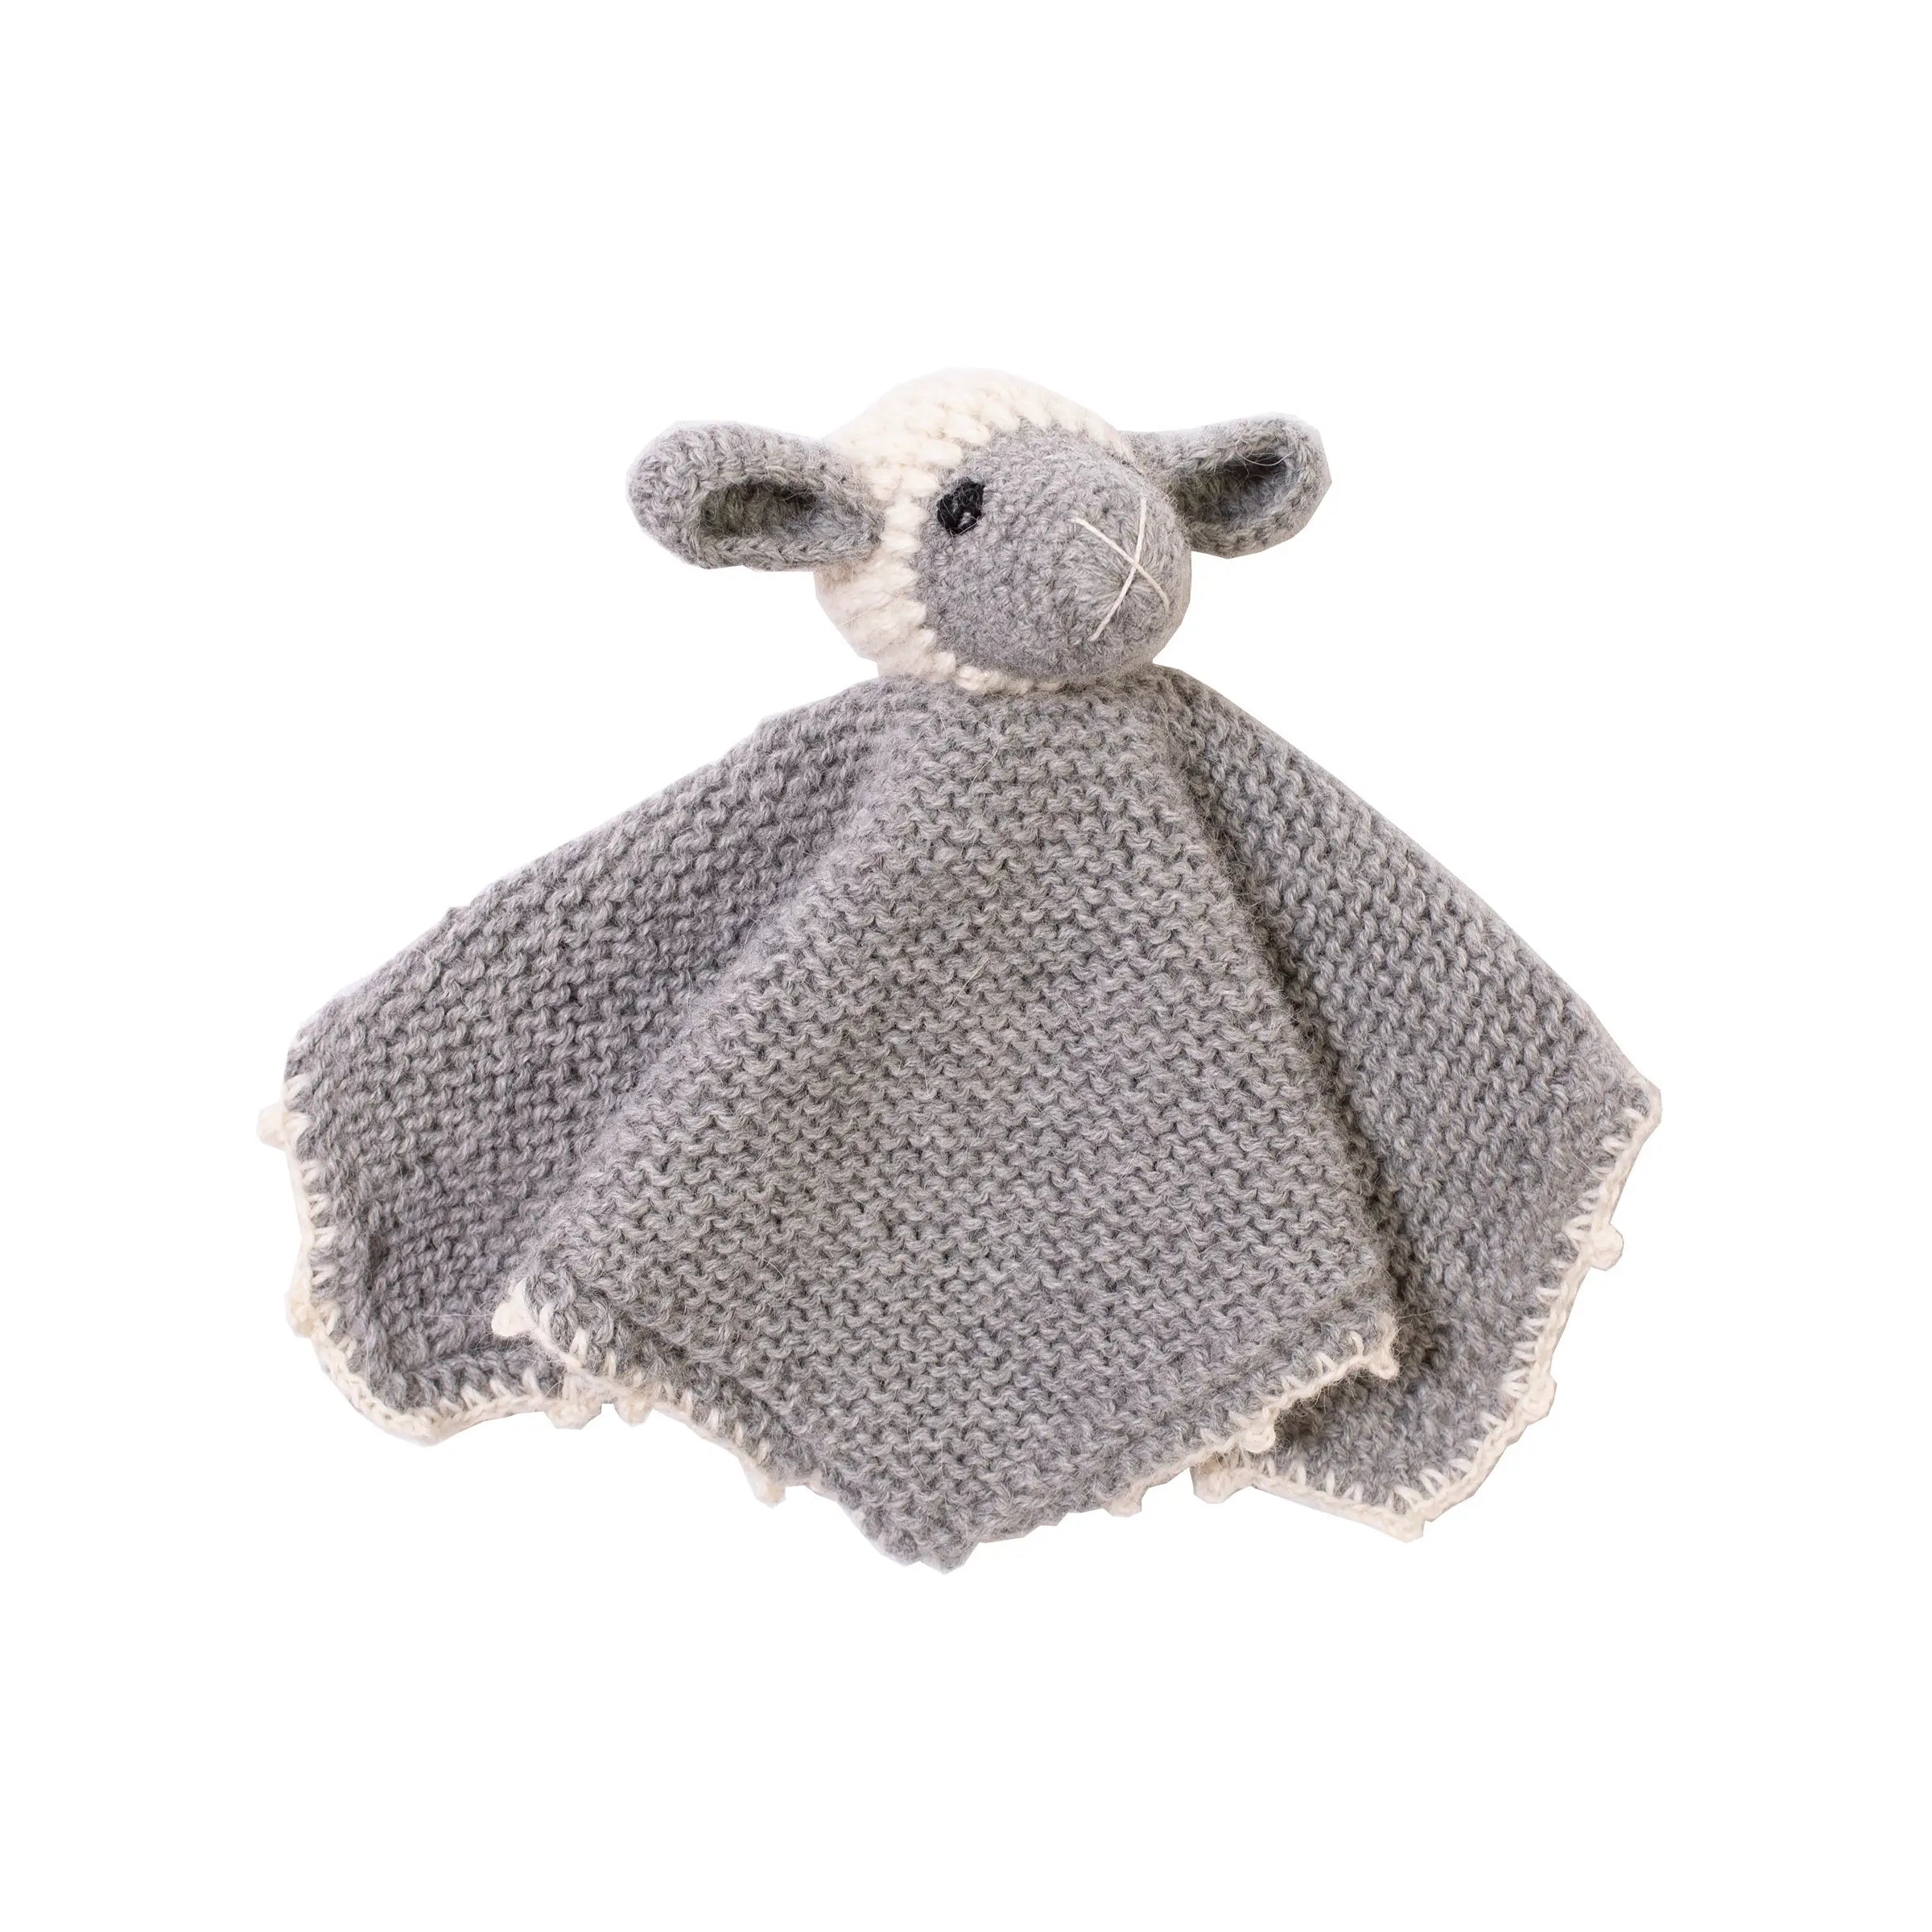 Lulibear Handmade Crochet Knit Animals Blankets Hand Made In